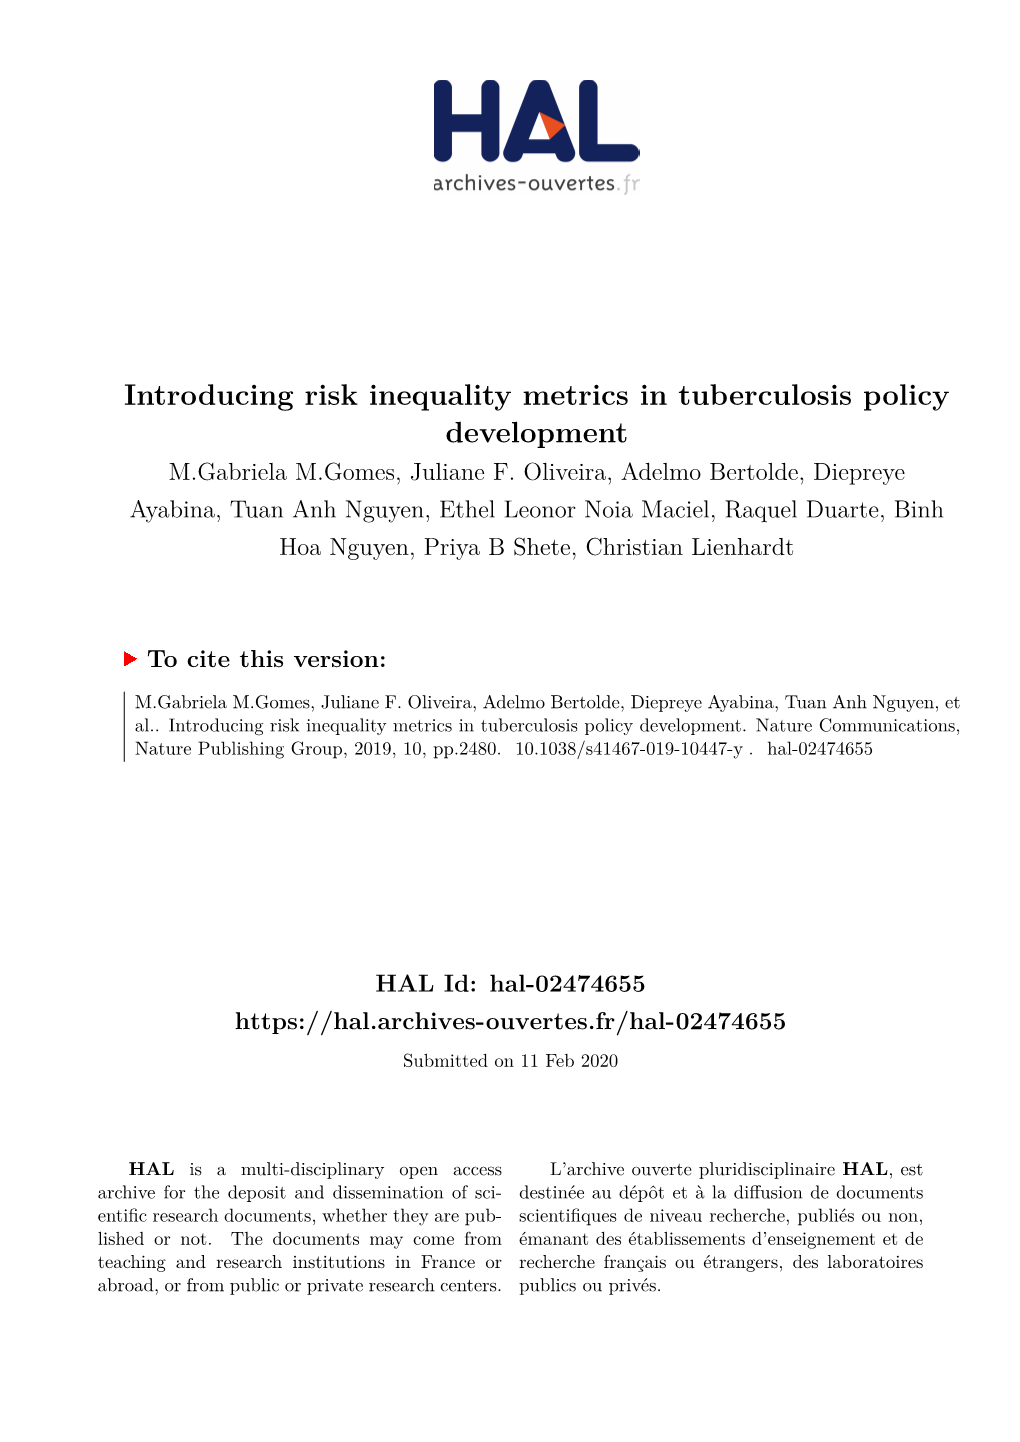 Introducing Risk Inequality Metrics in Tuberculosis Policy Development M.Gabriela M.Gomes, Juliane F